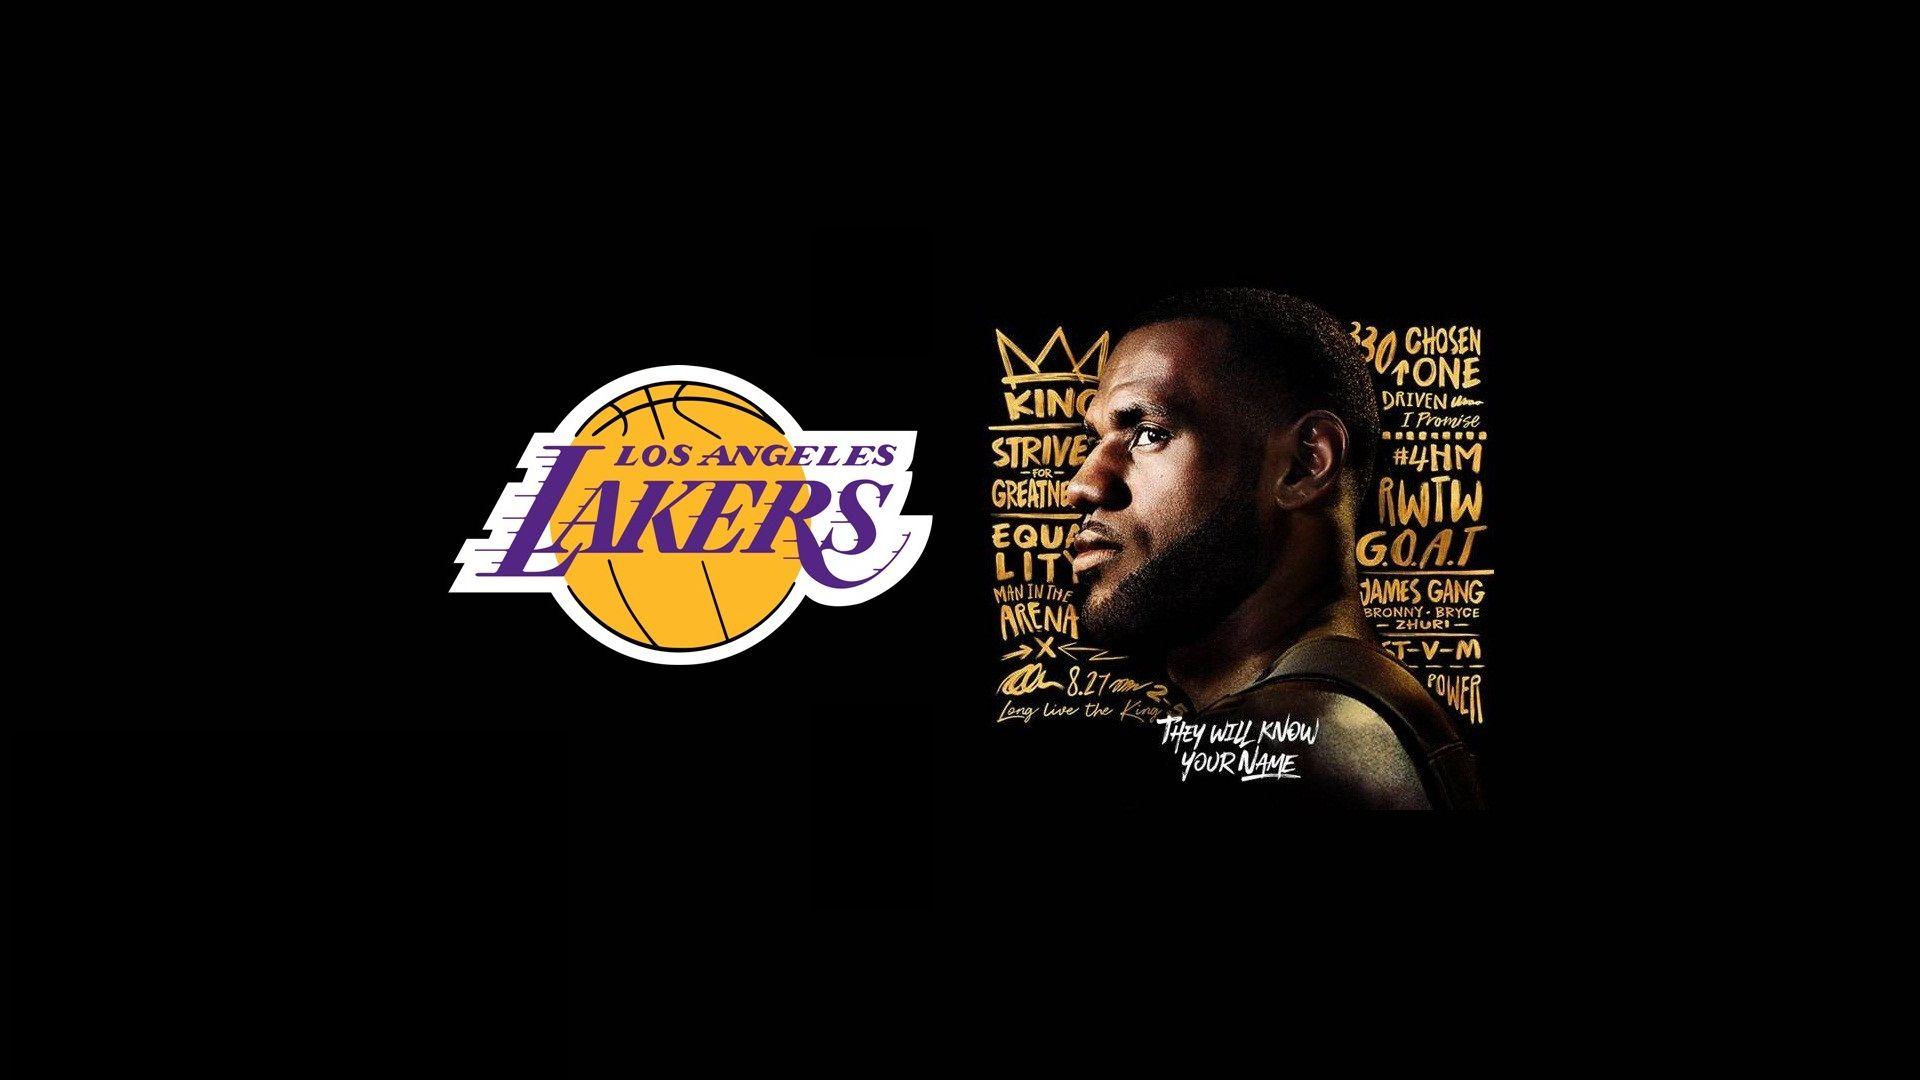 Los Angeles Lakers NBA Champions Wallpapers  TrumpWallpapers